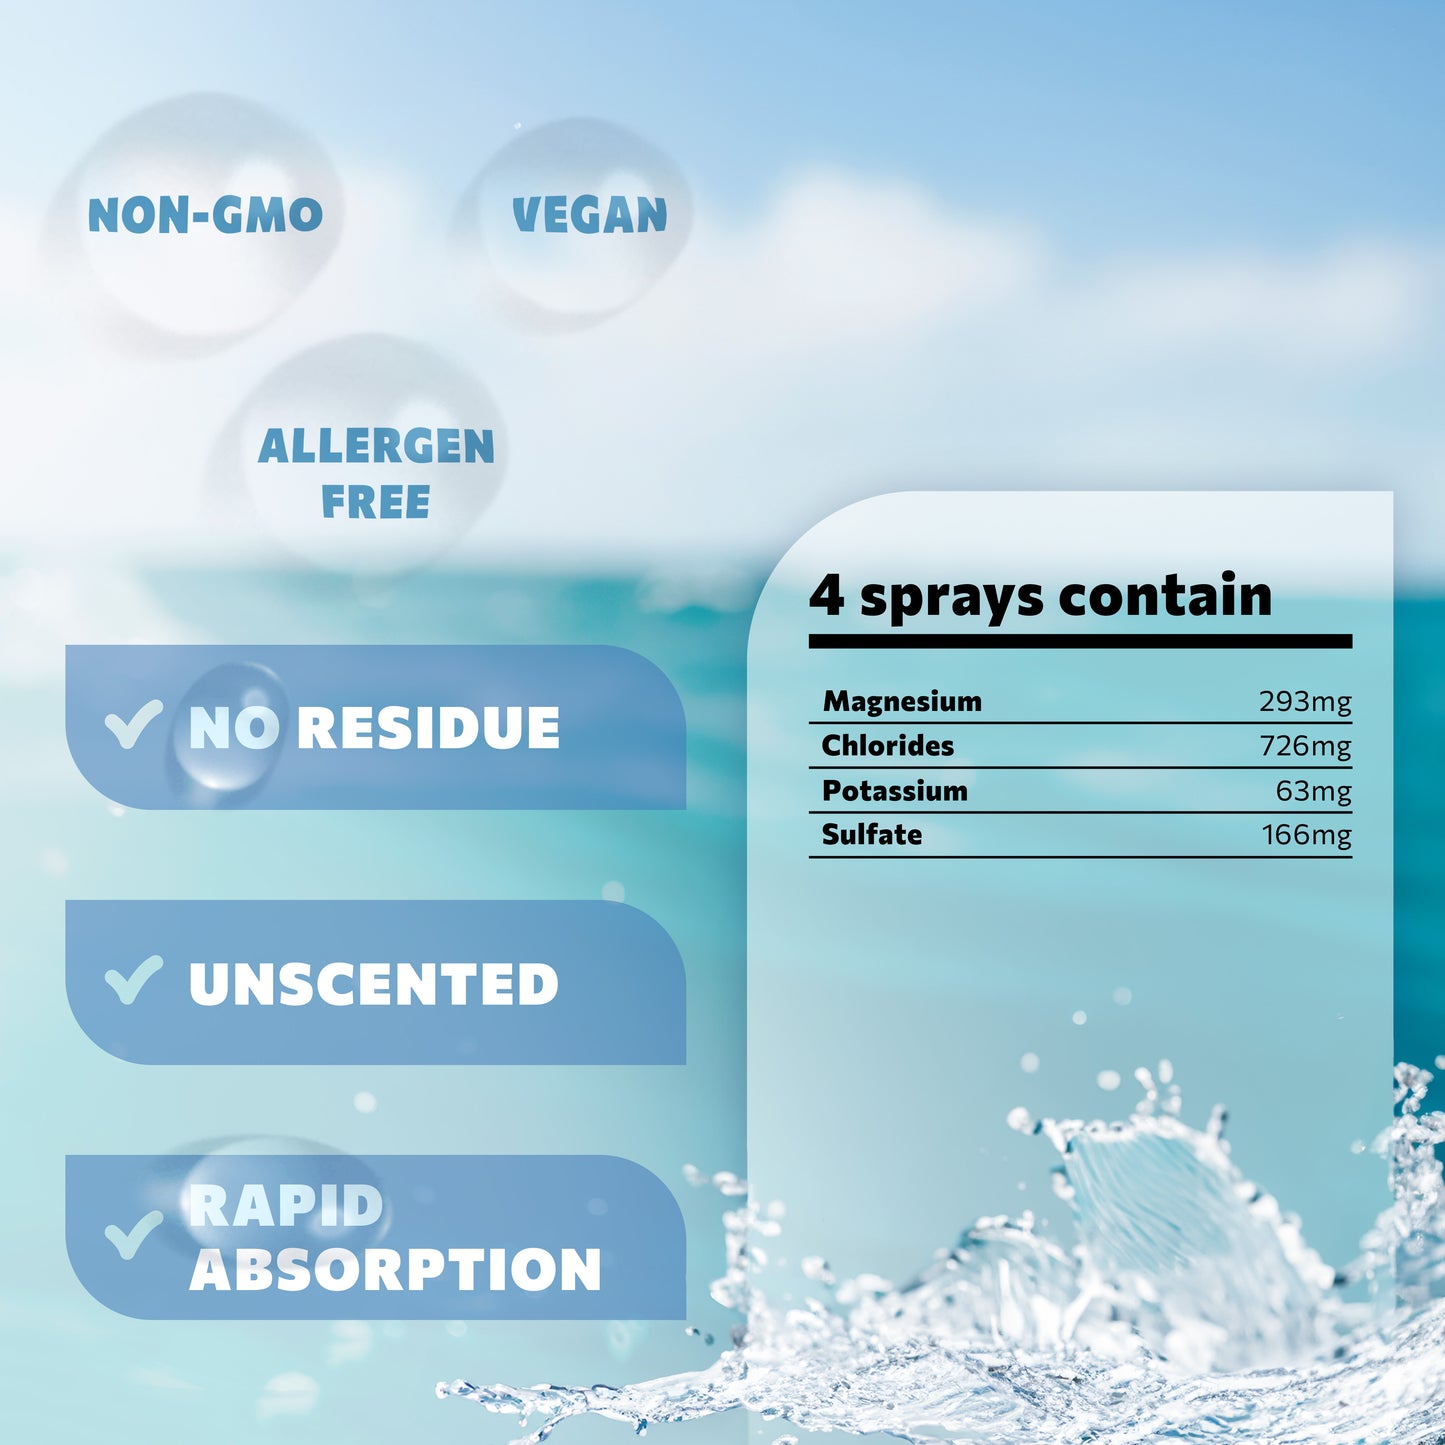 Hydration & Recovery Kit (OceanElements + OceanPower)